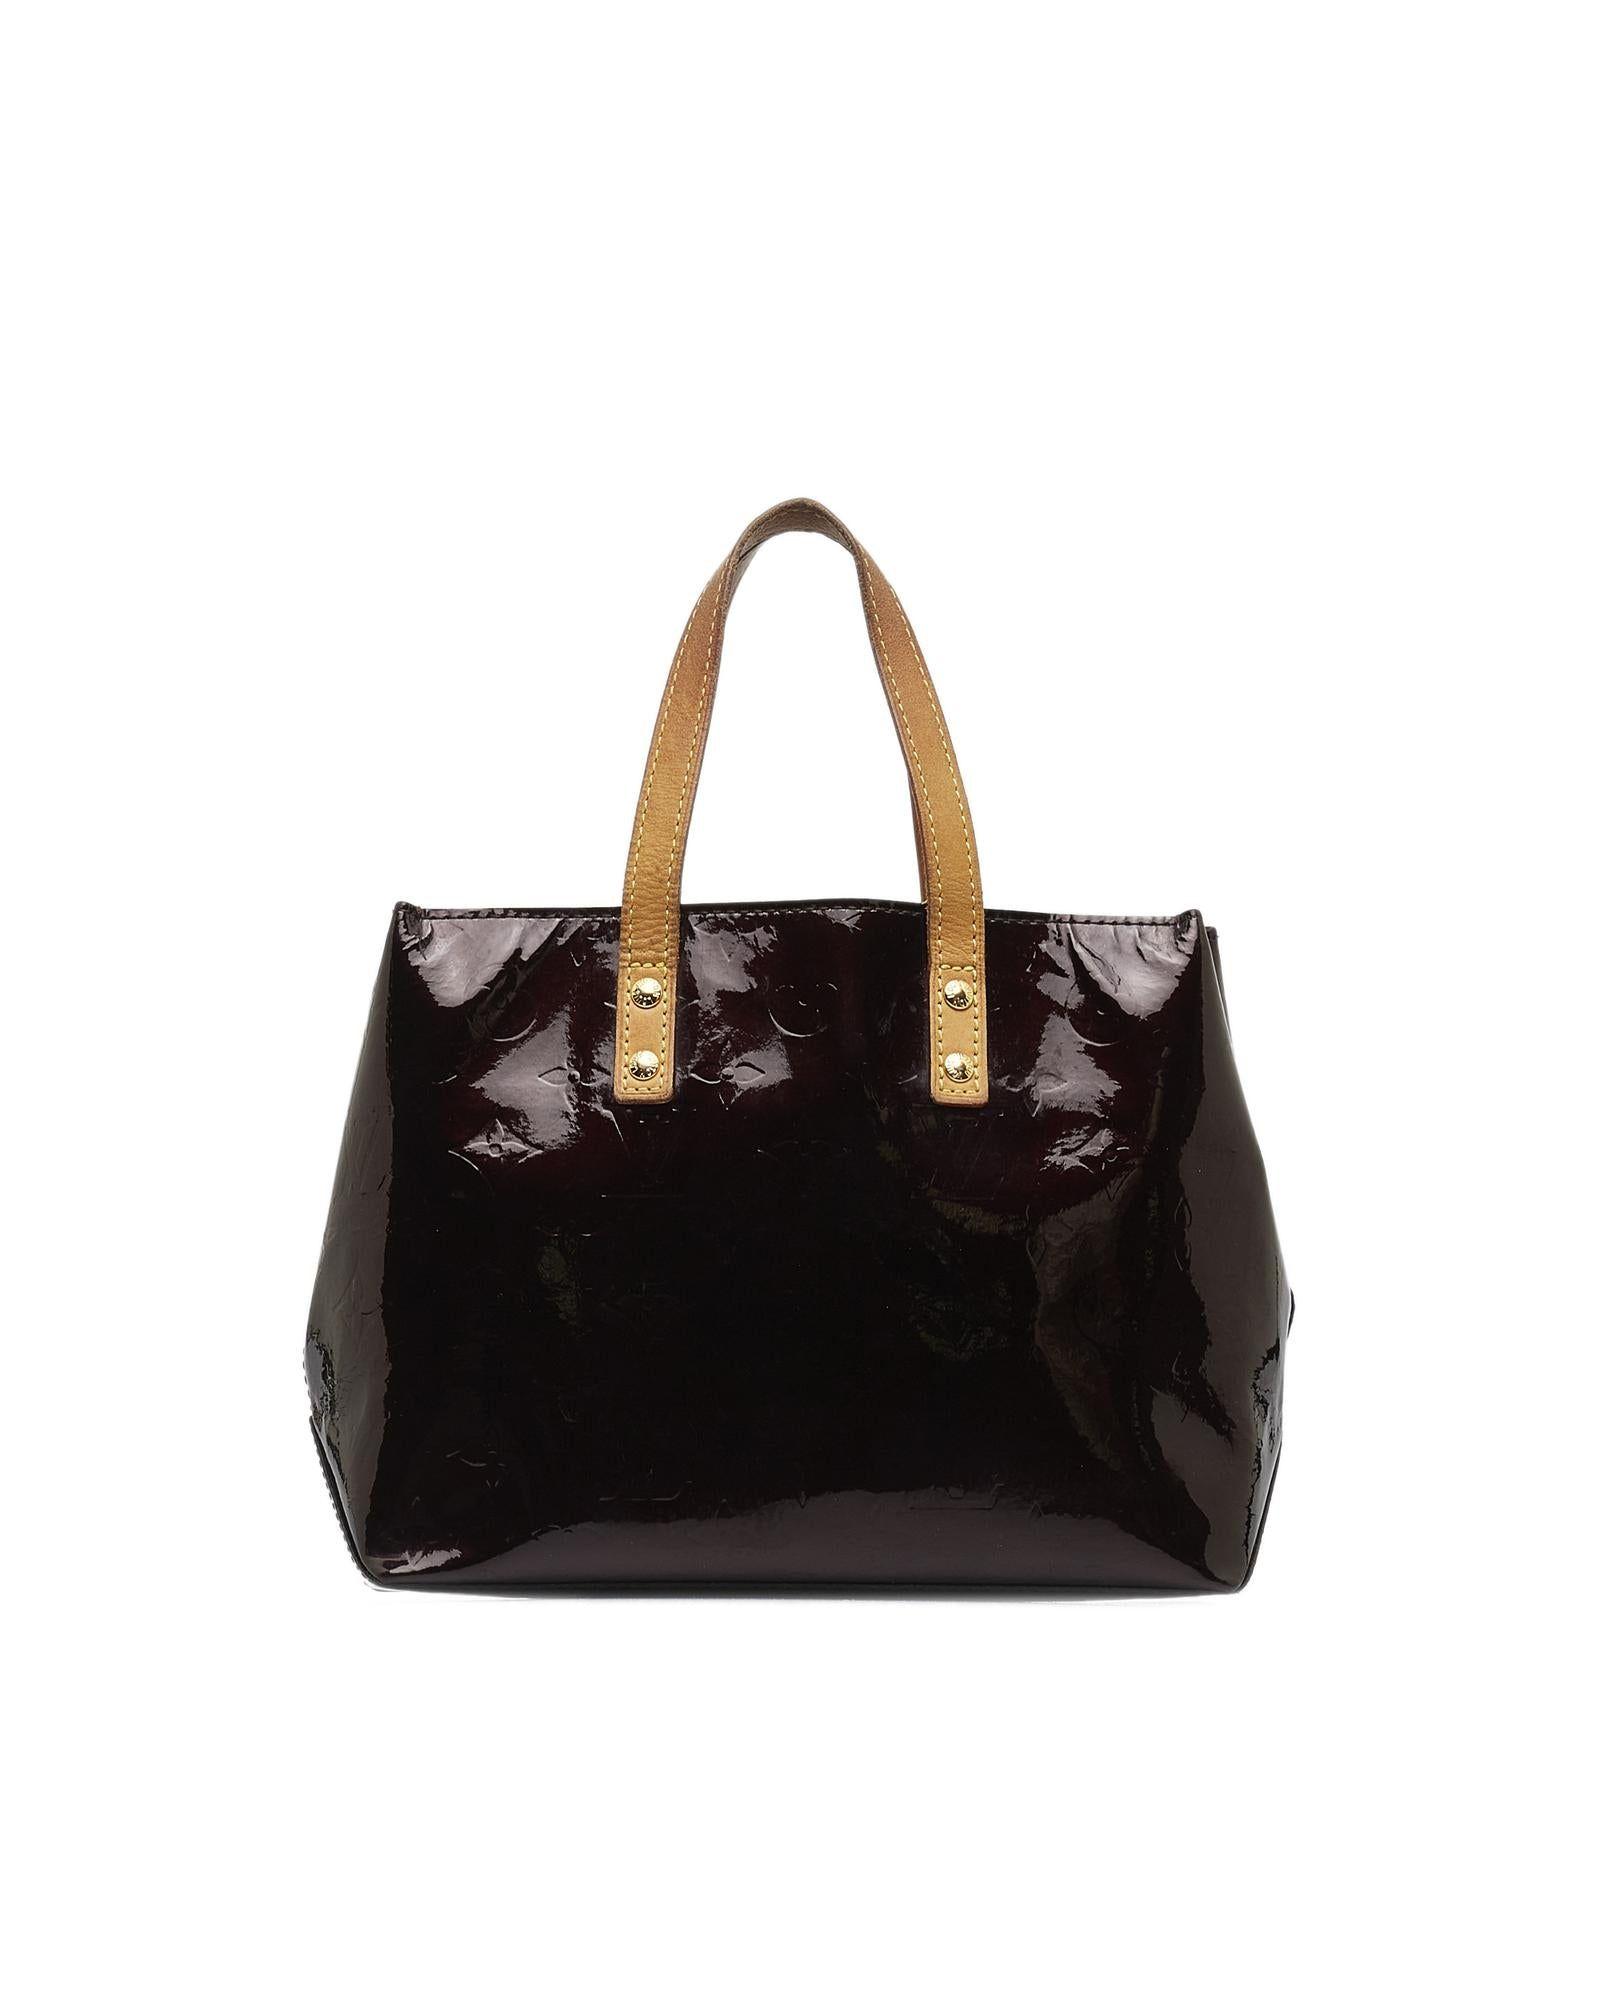 Louis Vuitton Vernis Leather Open Top Handbag in Black